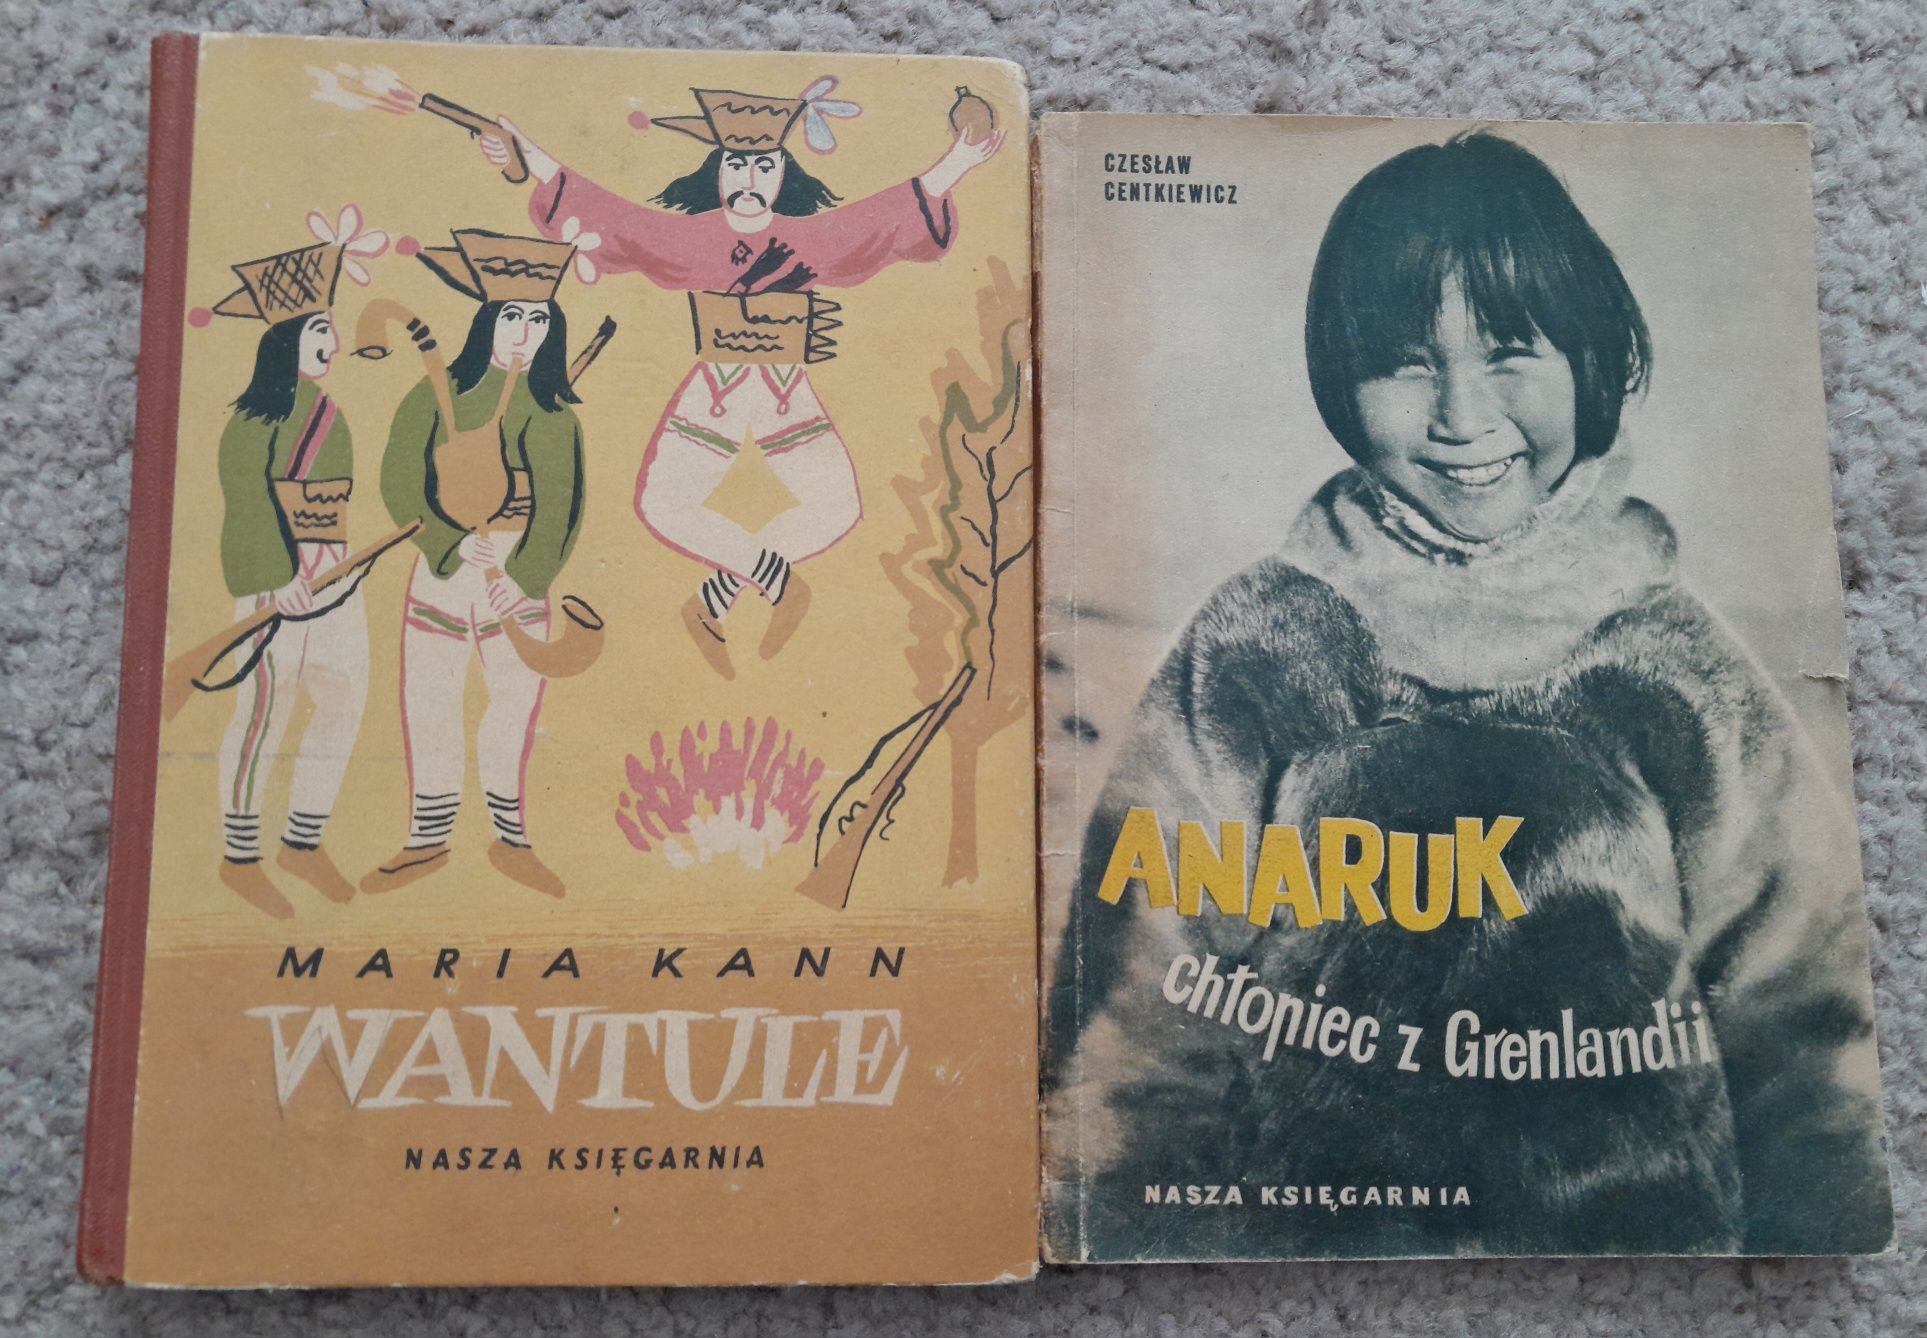 Wantule, Anaruk chłopiec Grenlandii Nasza Księgarnia